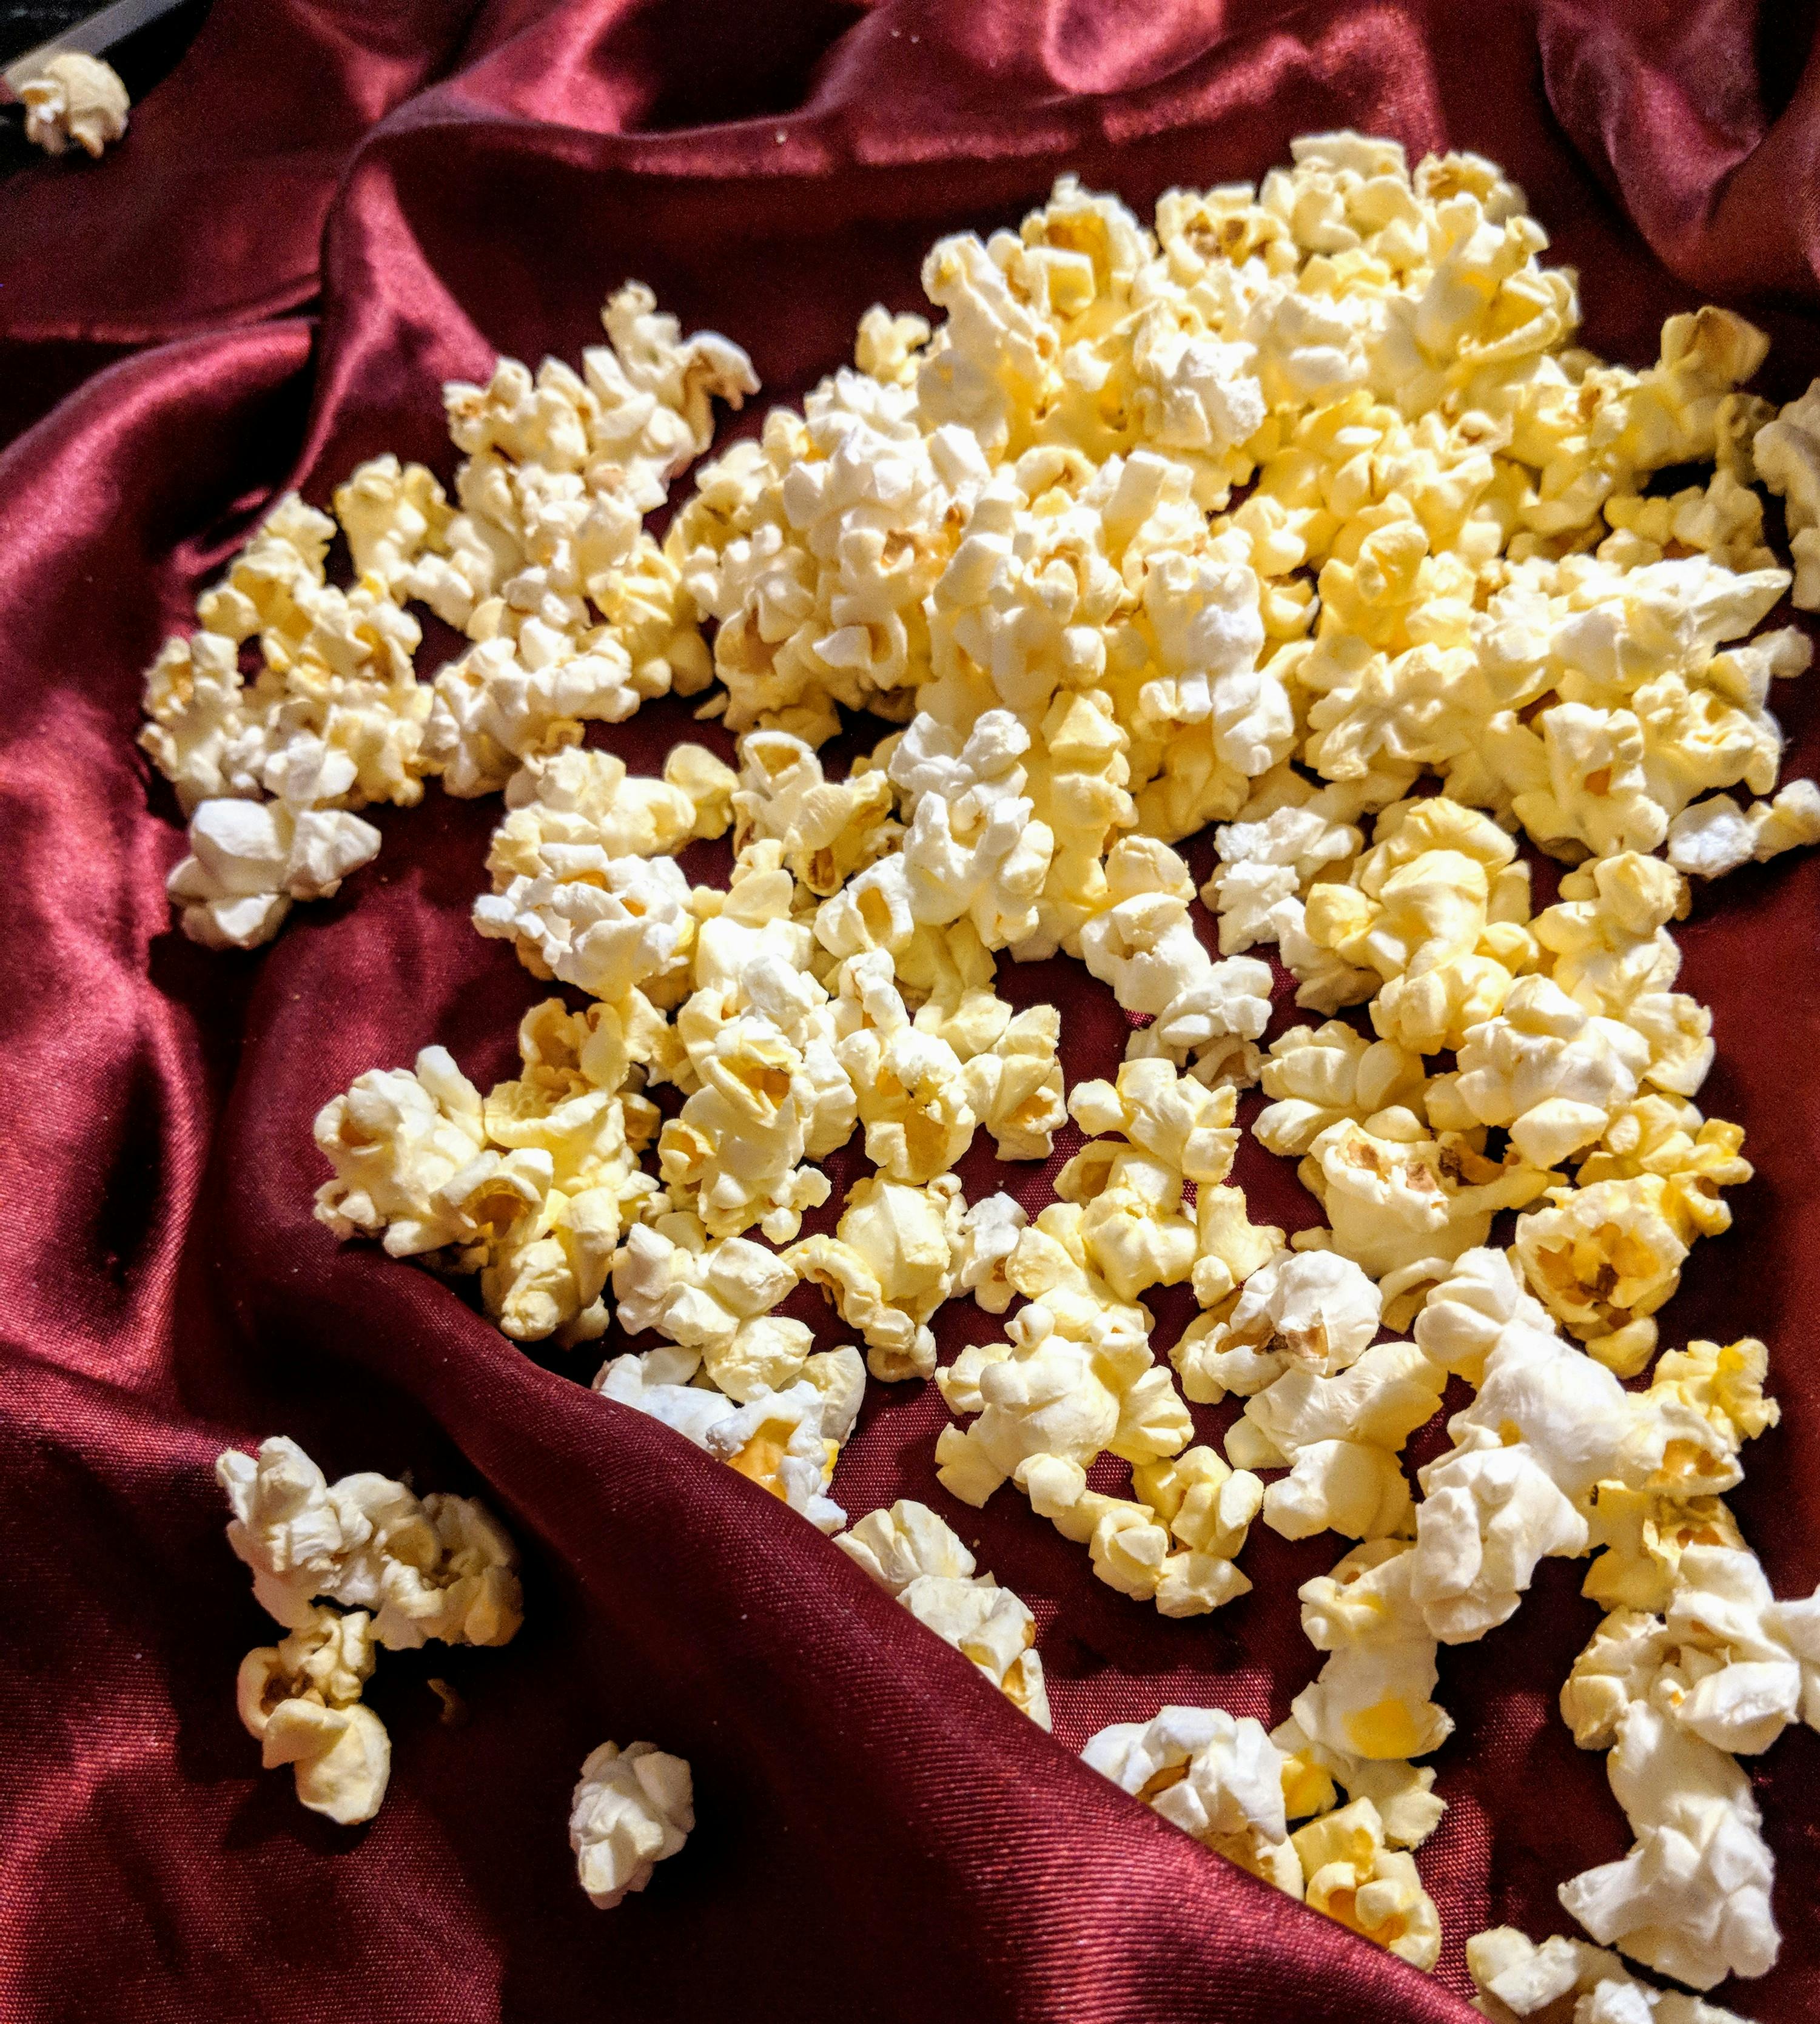 Free stock photo of popcorn, Popcorn art photo, red food photo